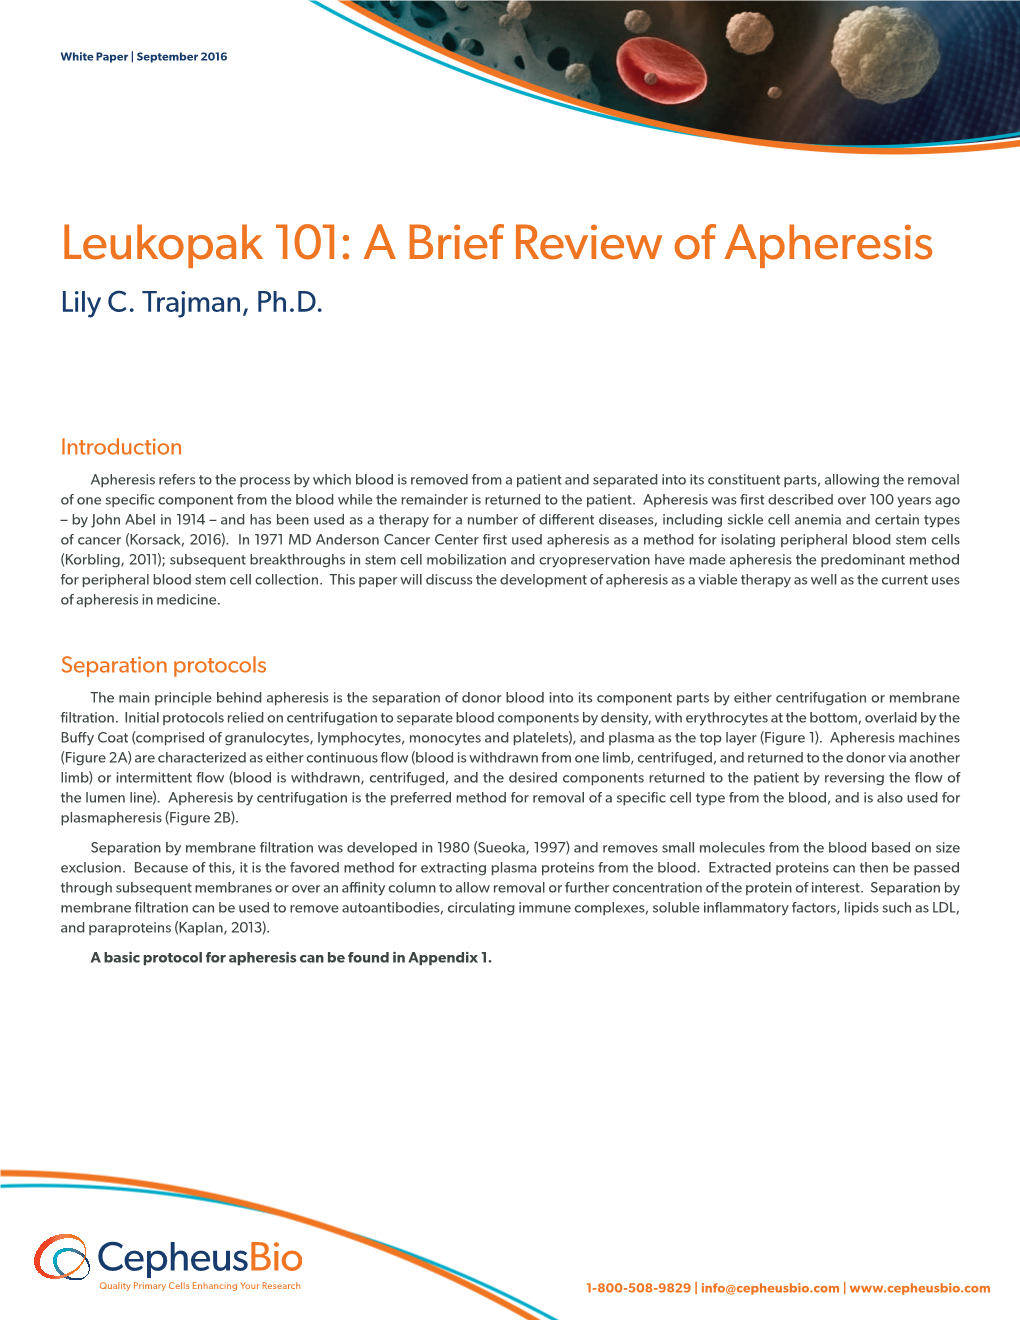 Leukopak 101: a Brief Review of Apheresis Lily C